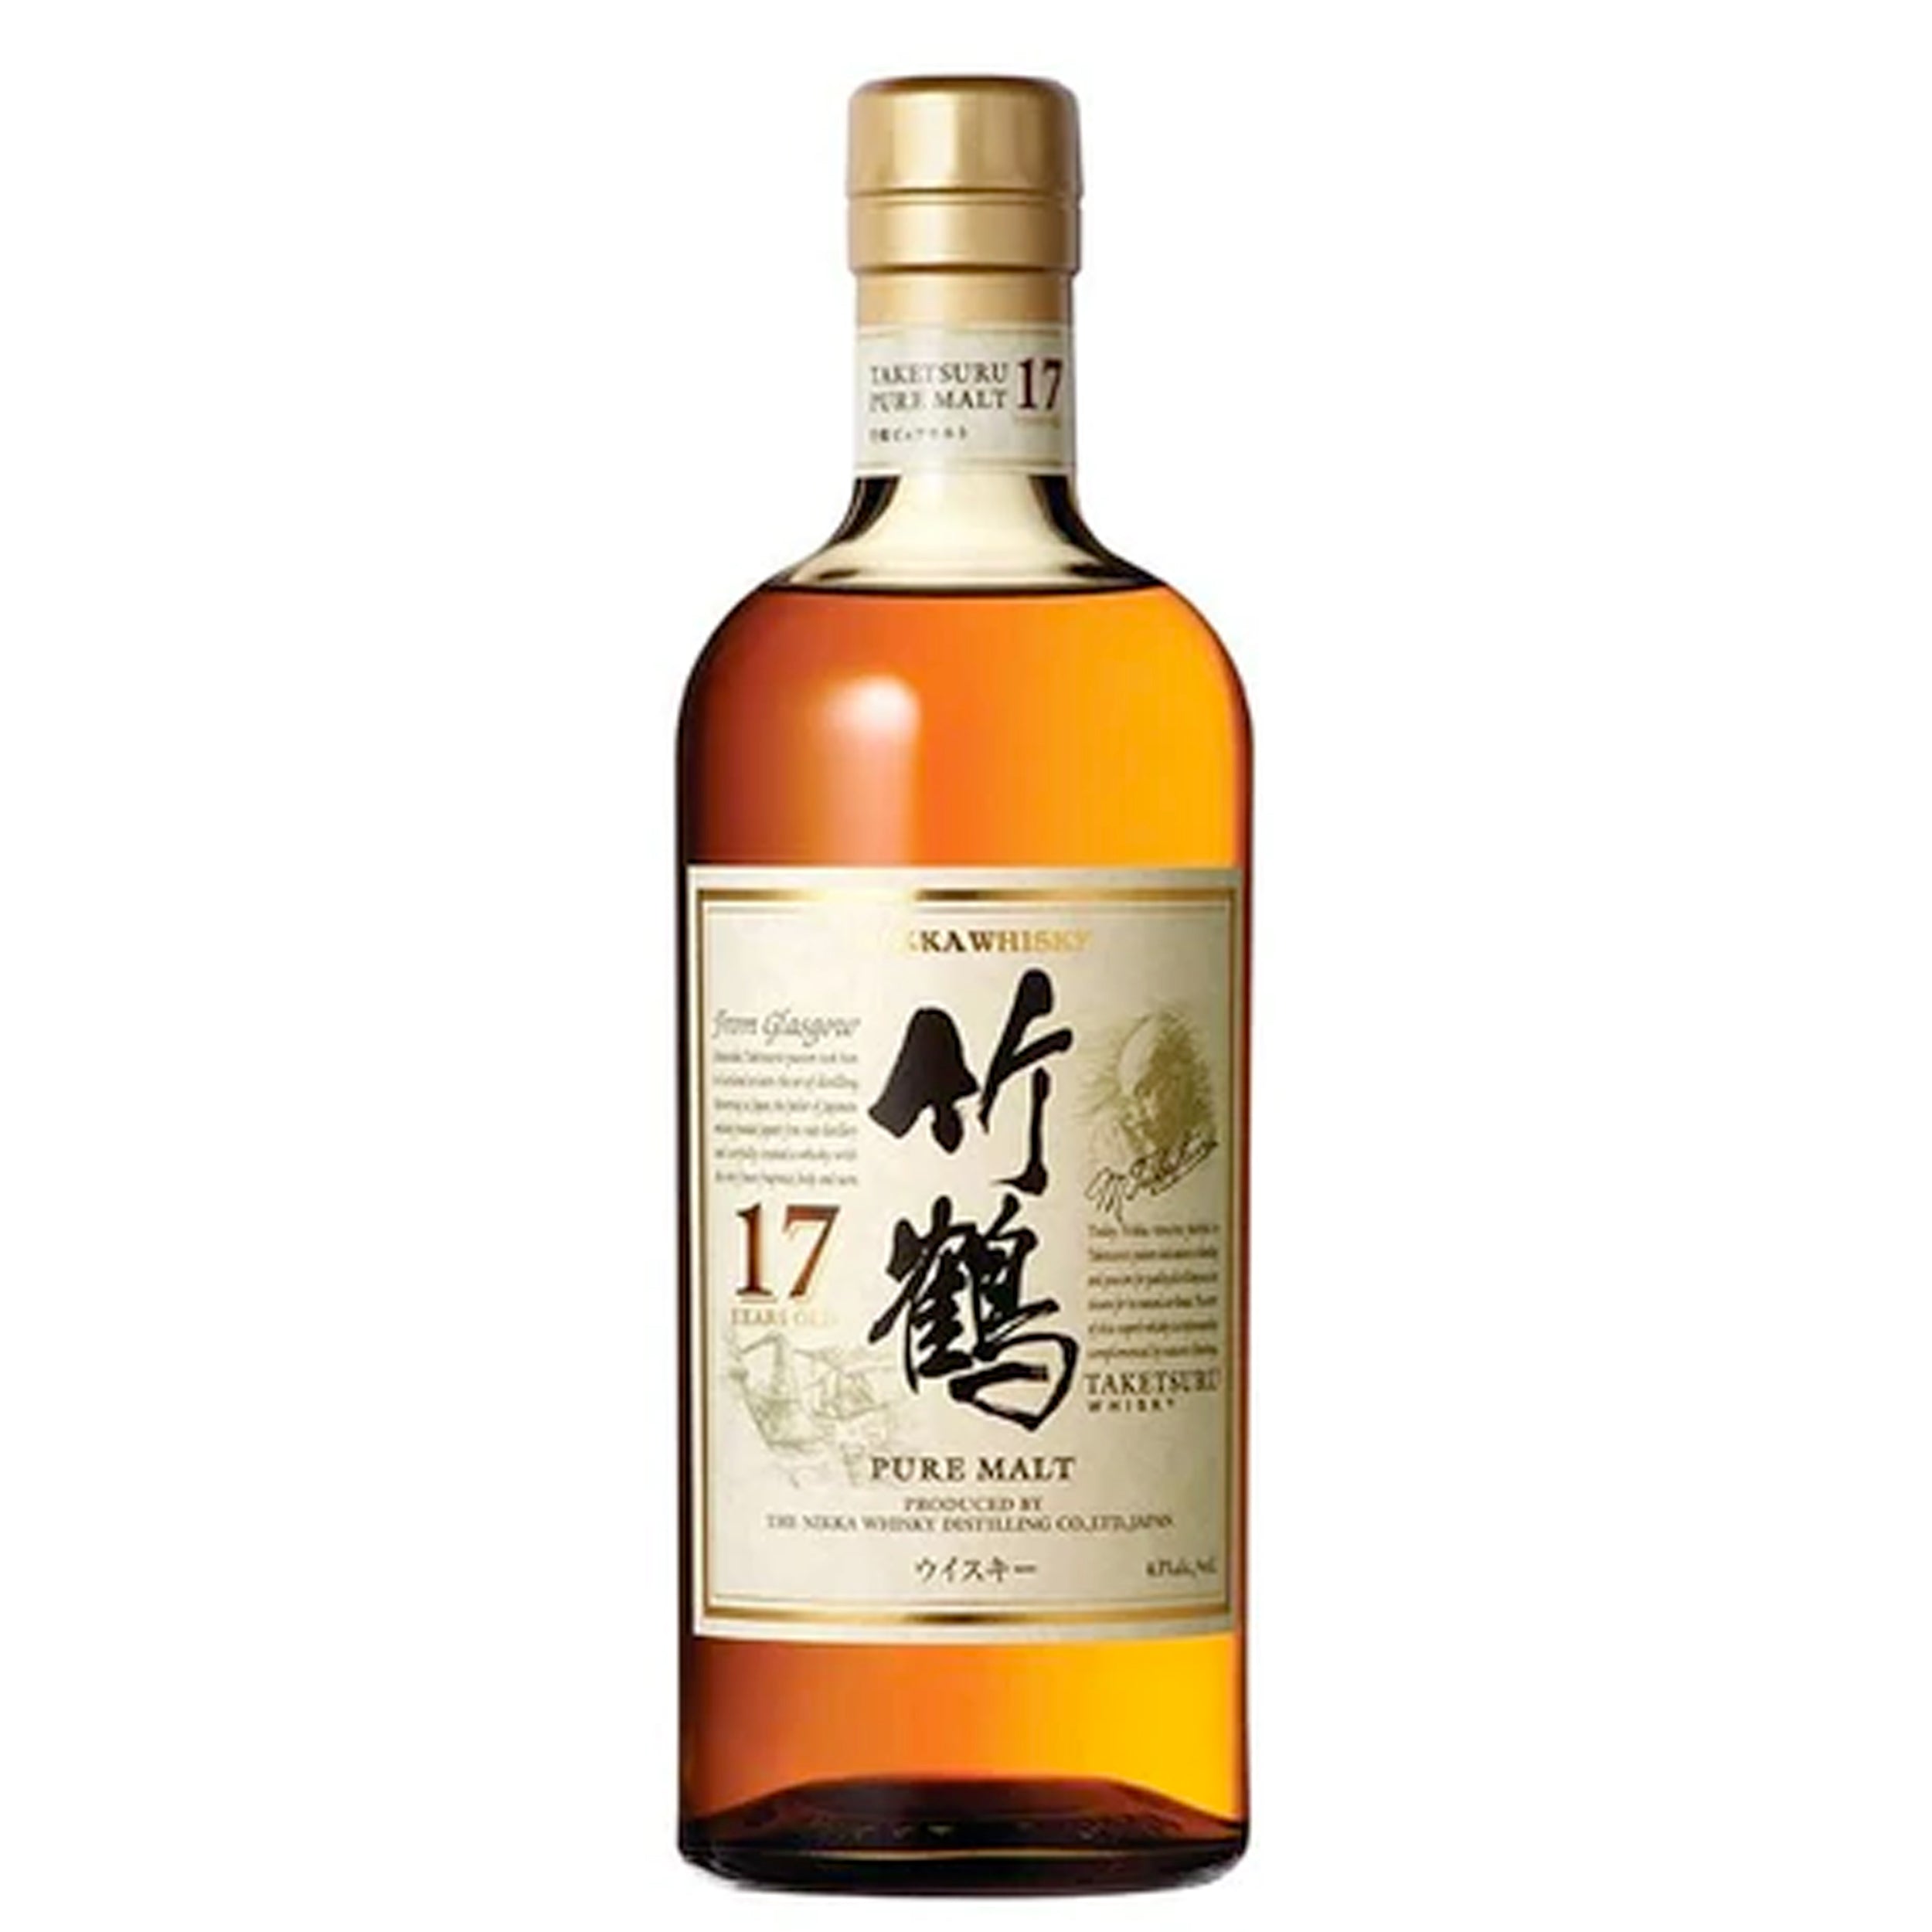 Nikka Taketsuru 17 Year Old Japanese Whisky